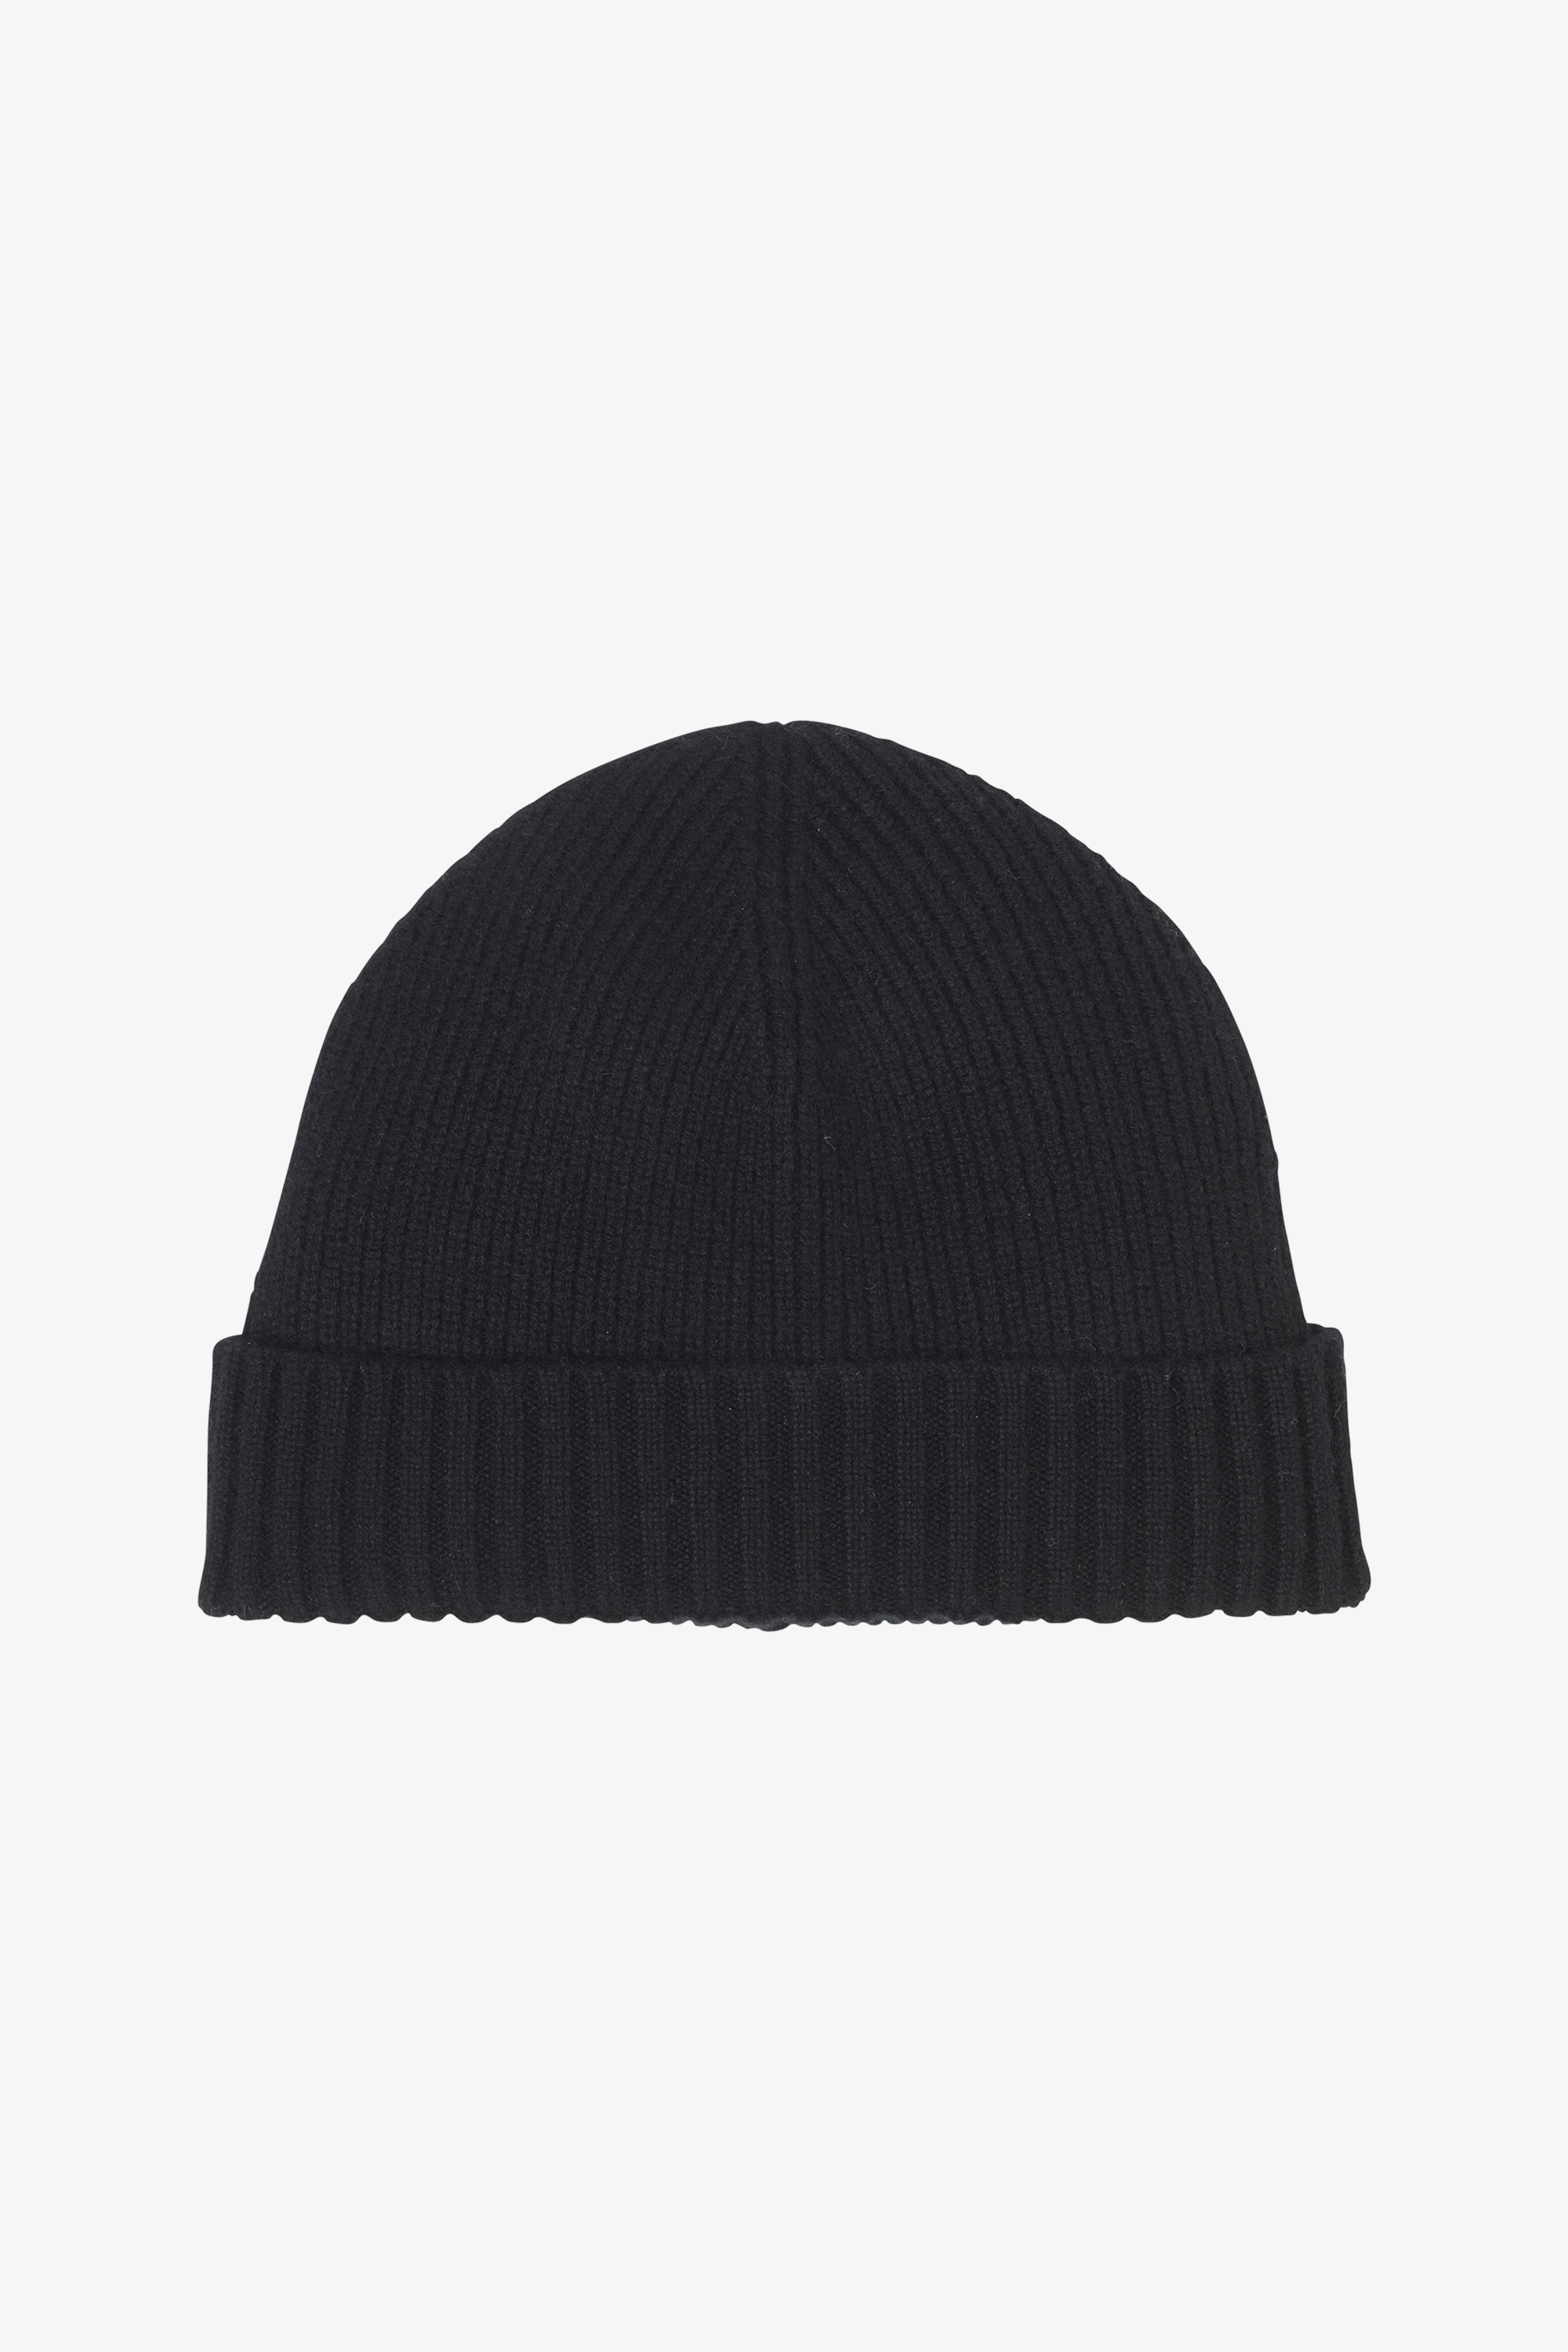 Cashmere hat in black // MM.LaFleur